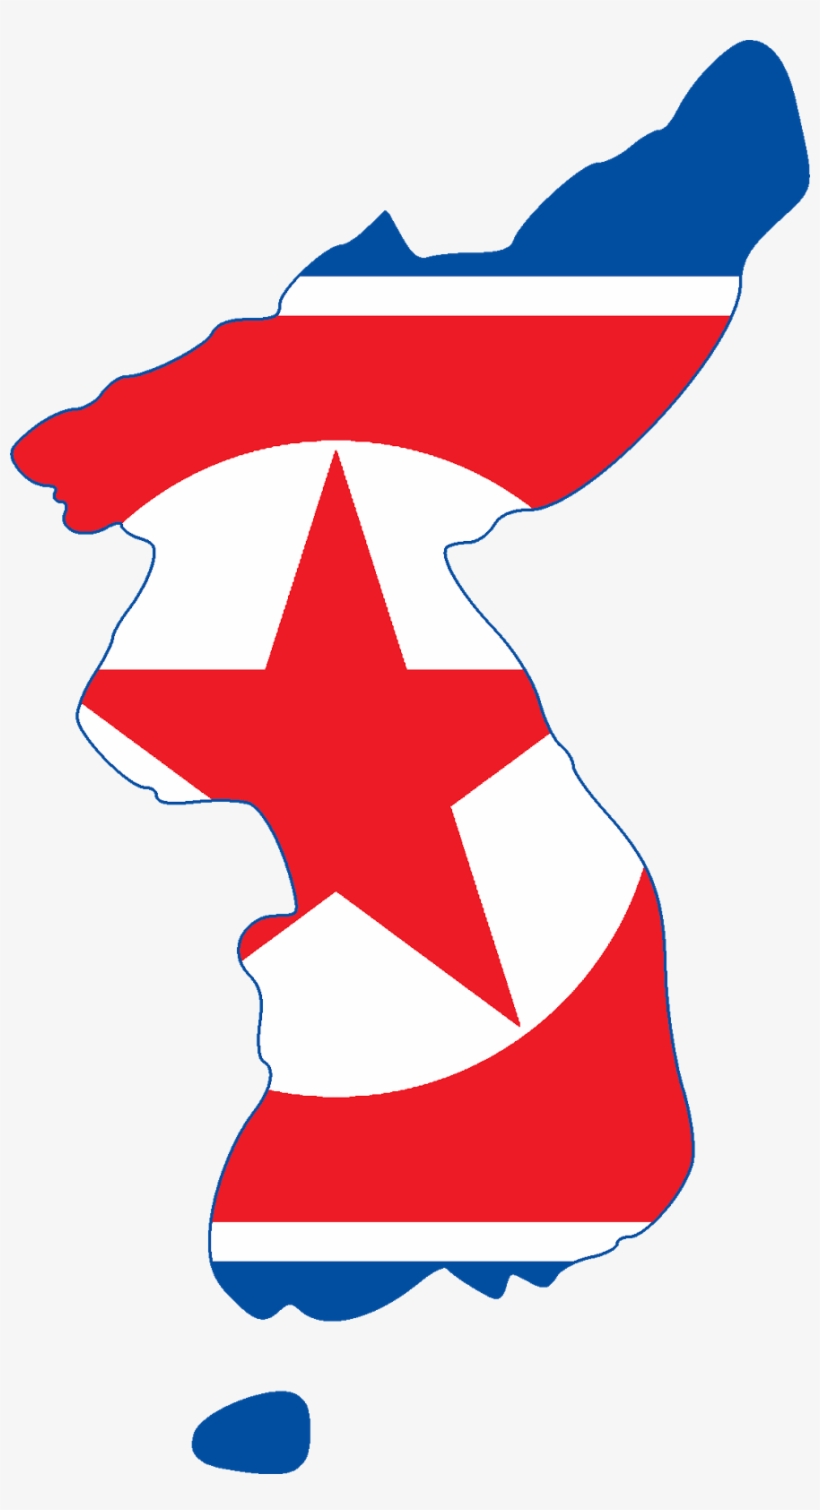 North Korea Flag With Map Graphics - North Korea Flag Map, transparent png #503894